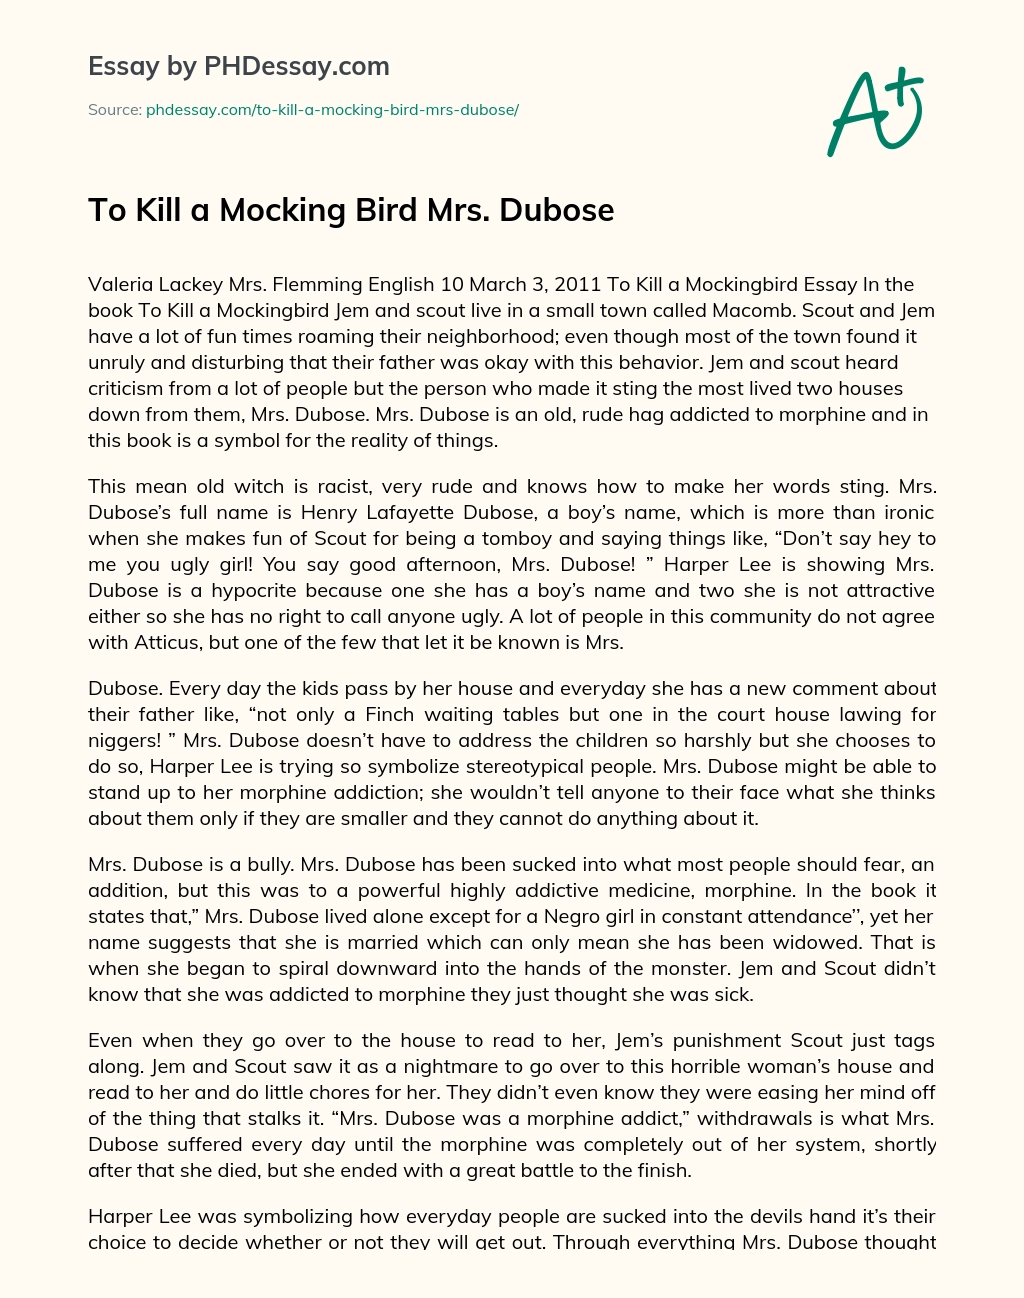 To Kill a Mocking Bird Mrs. Dubose essay